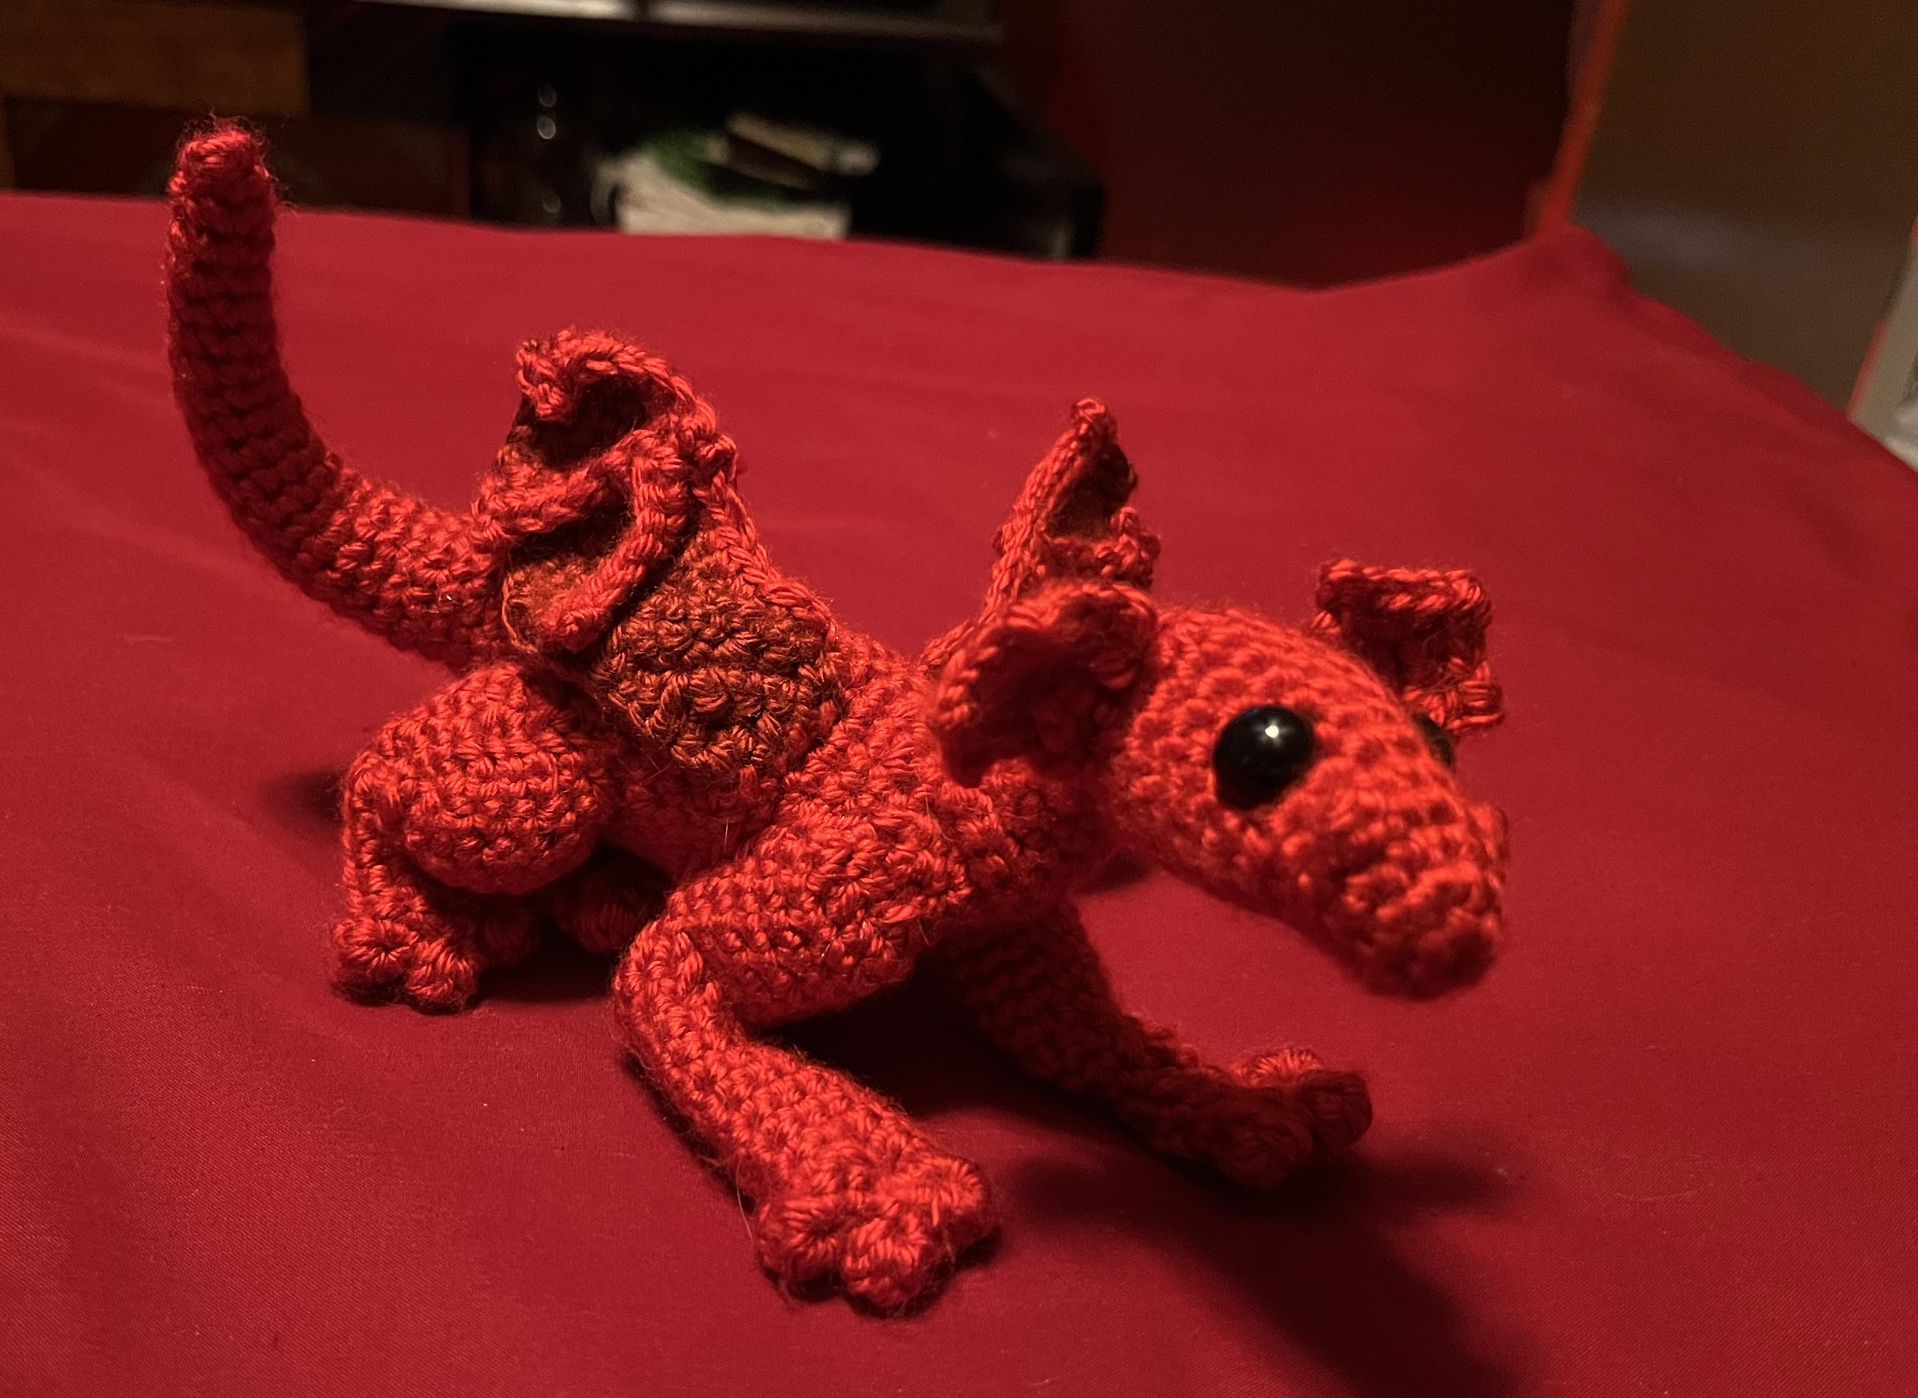 Crocheted Red Dragon Plushy